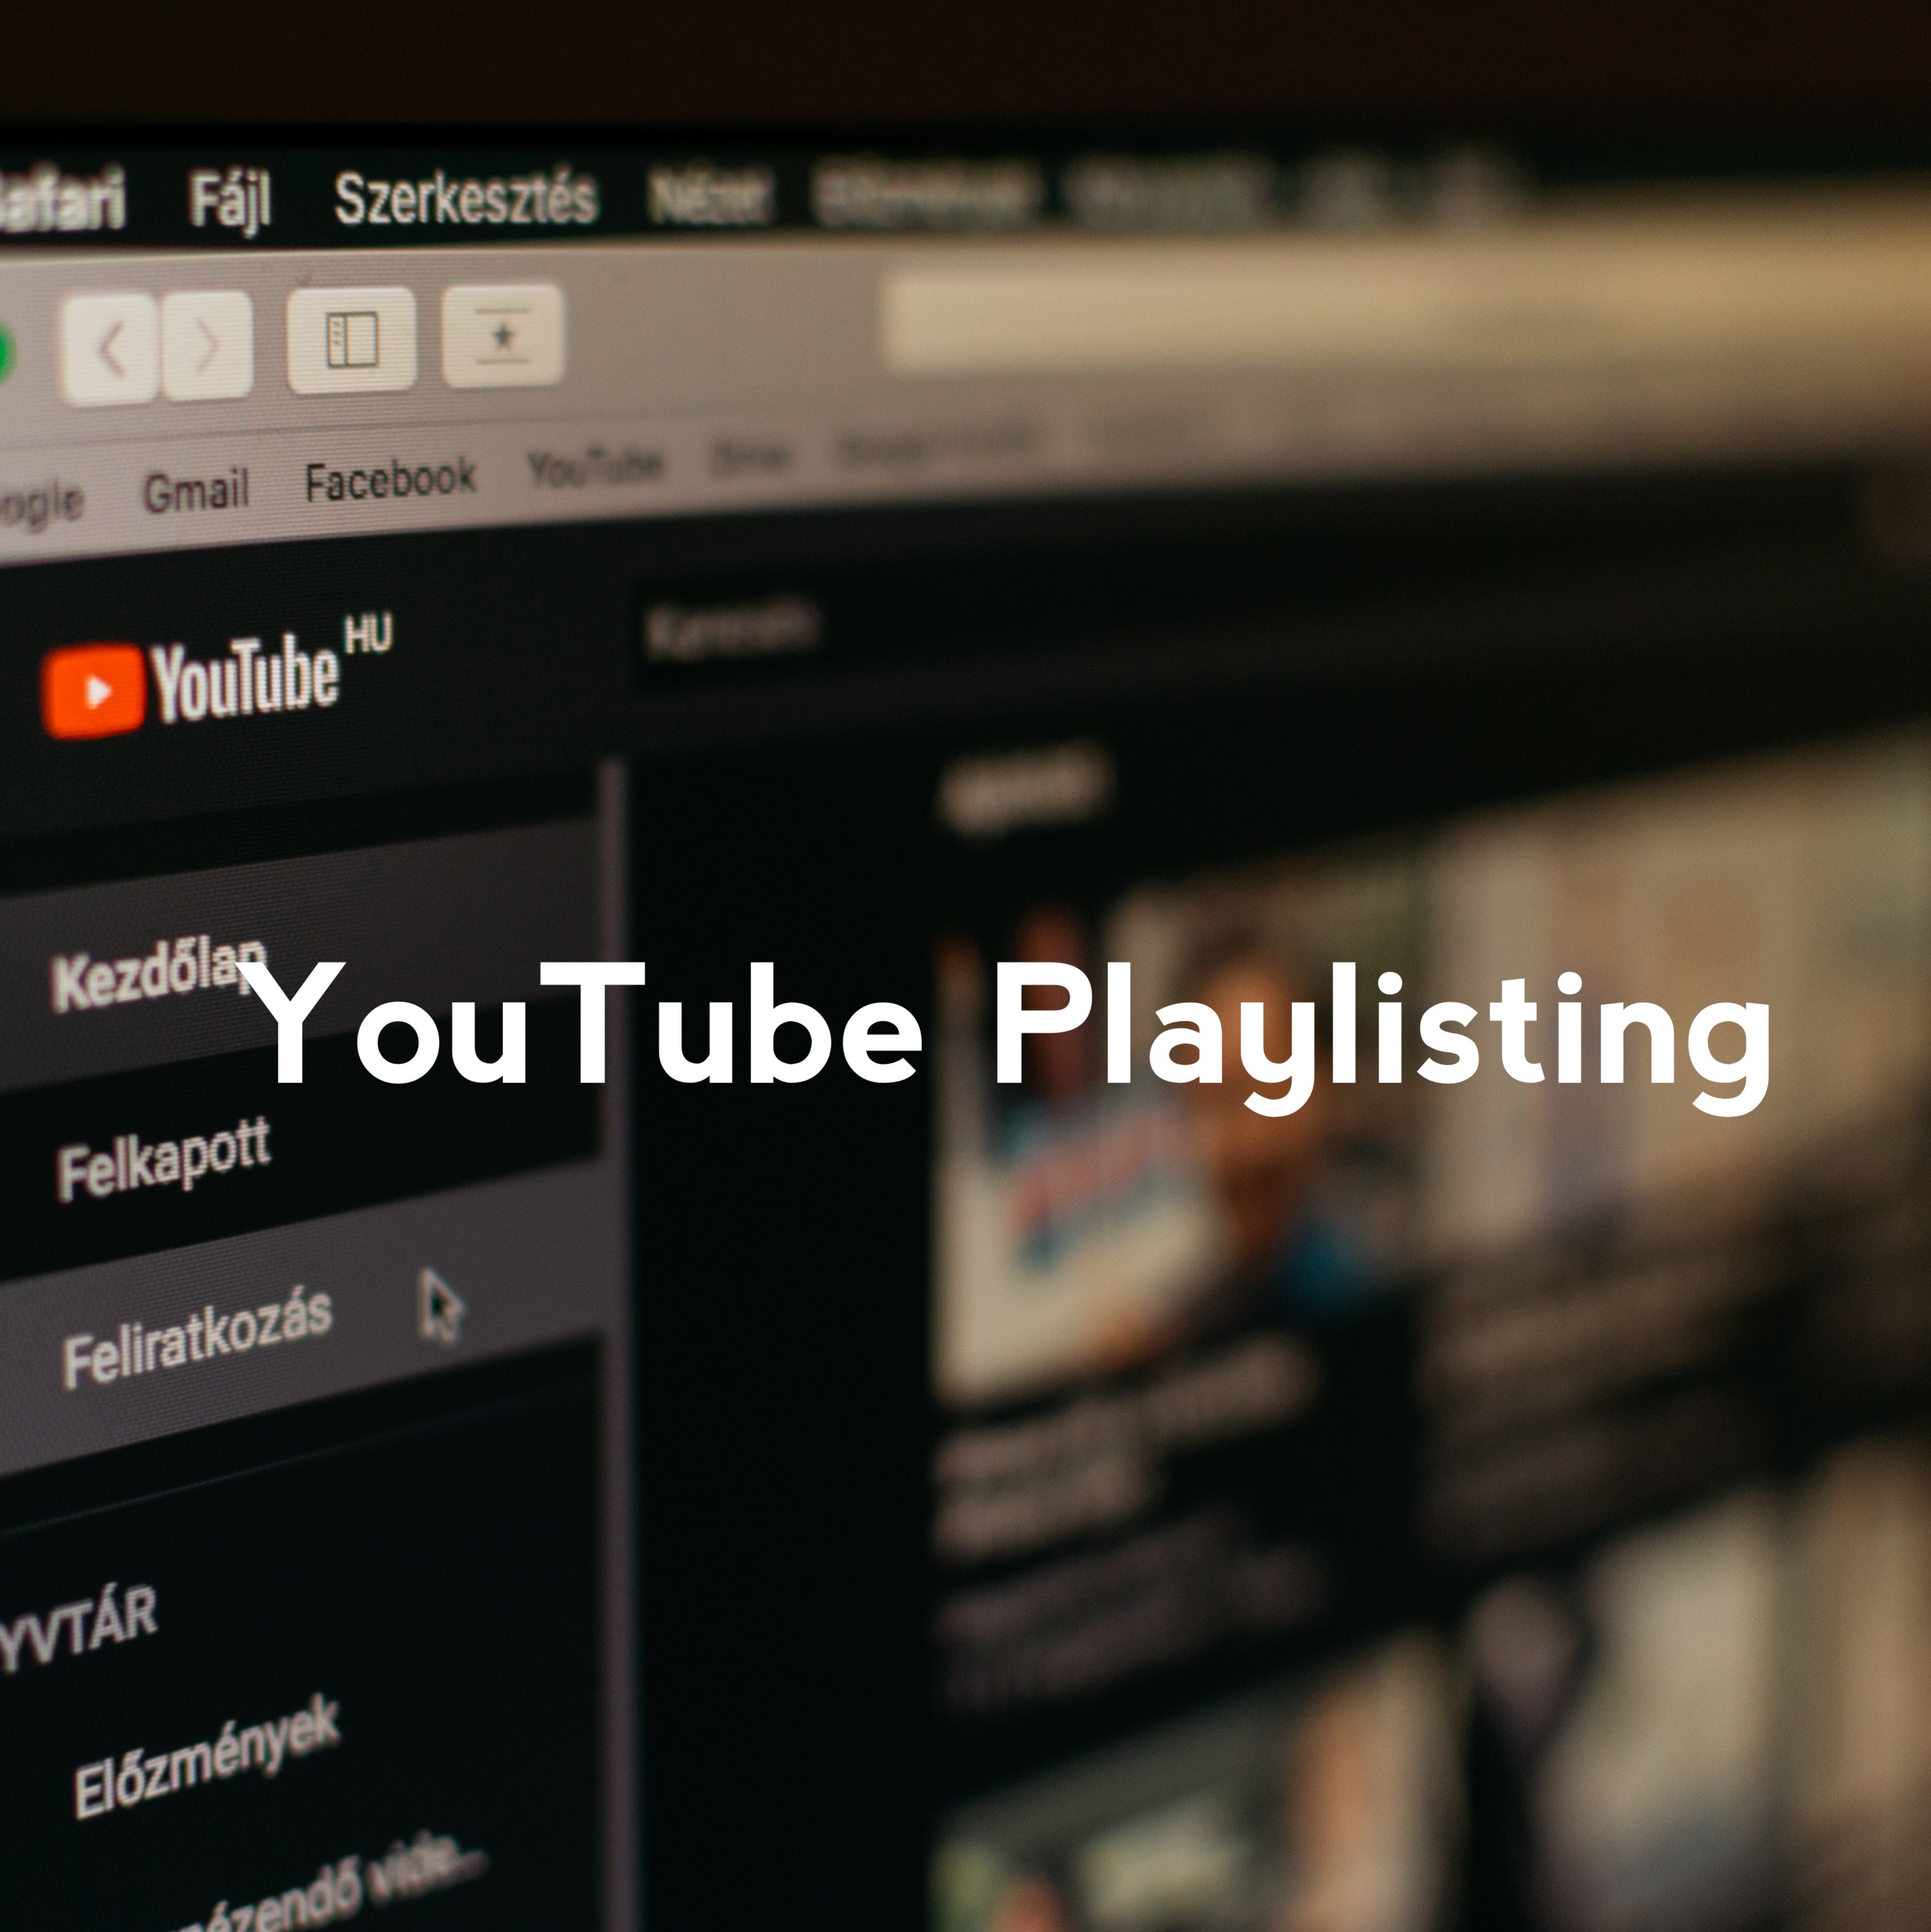 YouTube Playlisting Campaign - Enforce Media